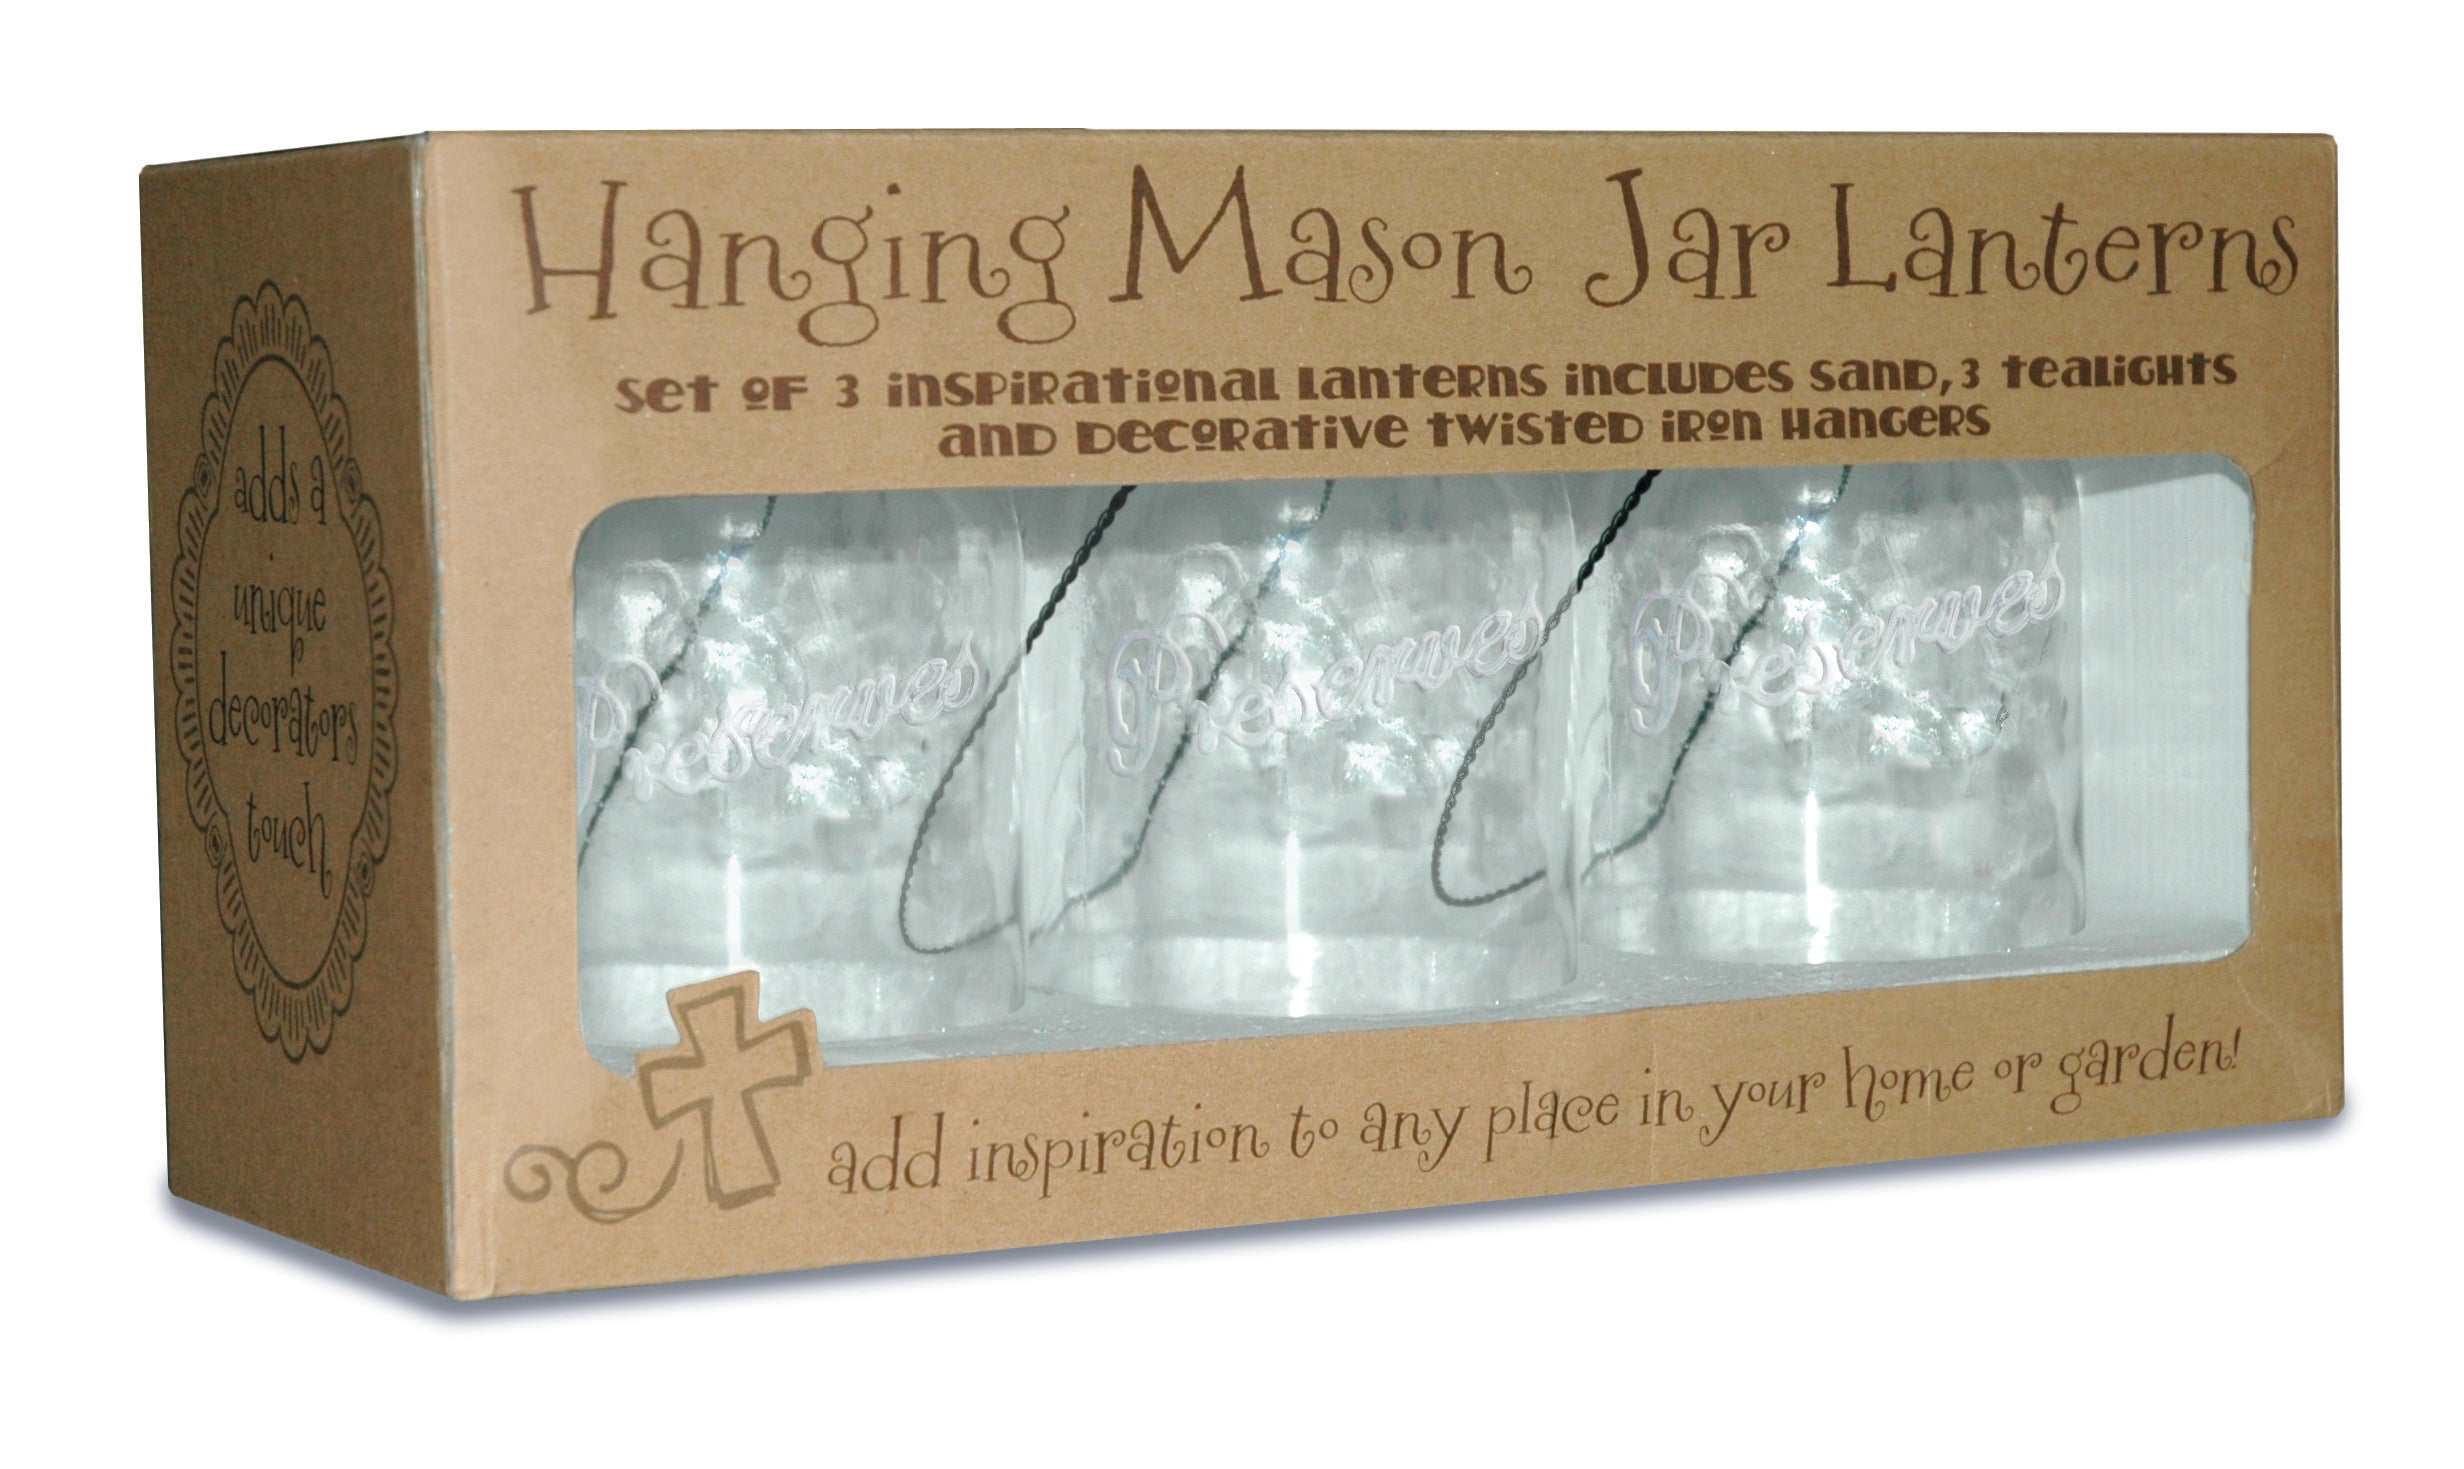 "Preserves" Mason Jar Lanterns, set of 3